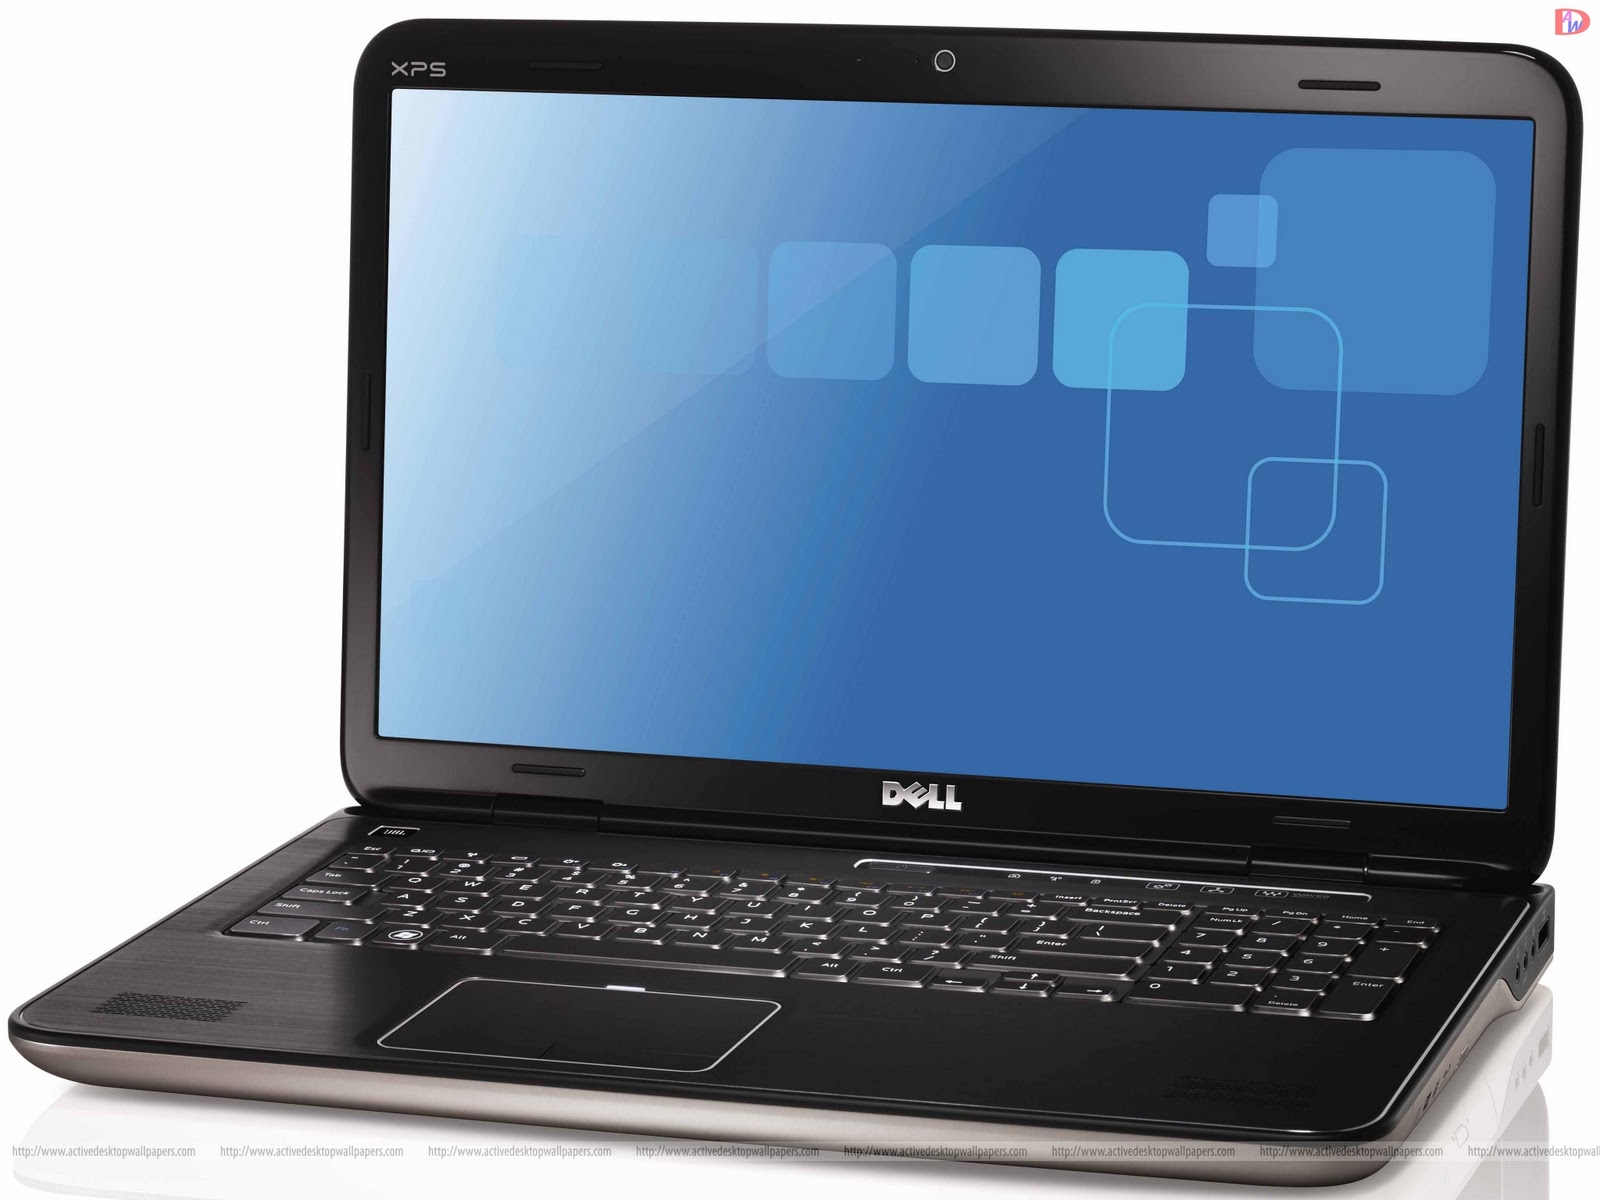 Laptop HD Image | Top Gadgets Review